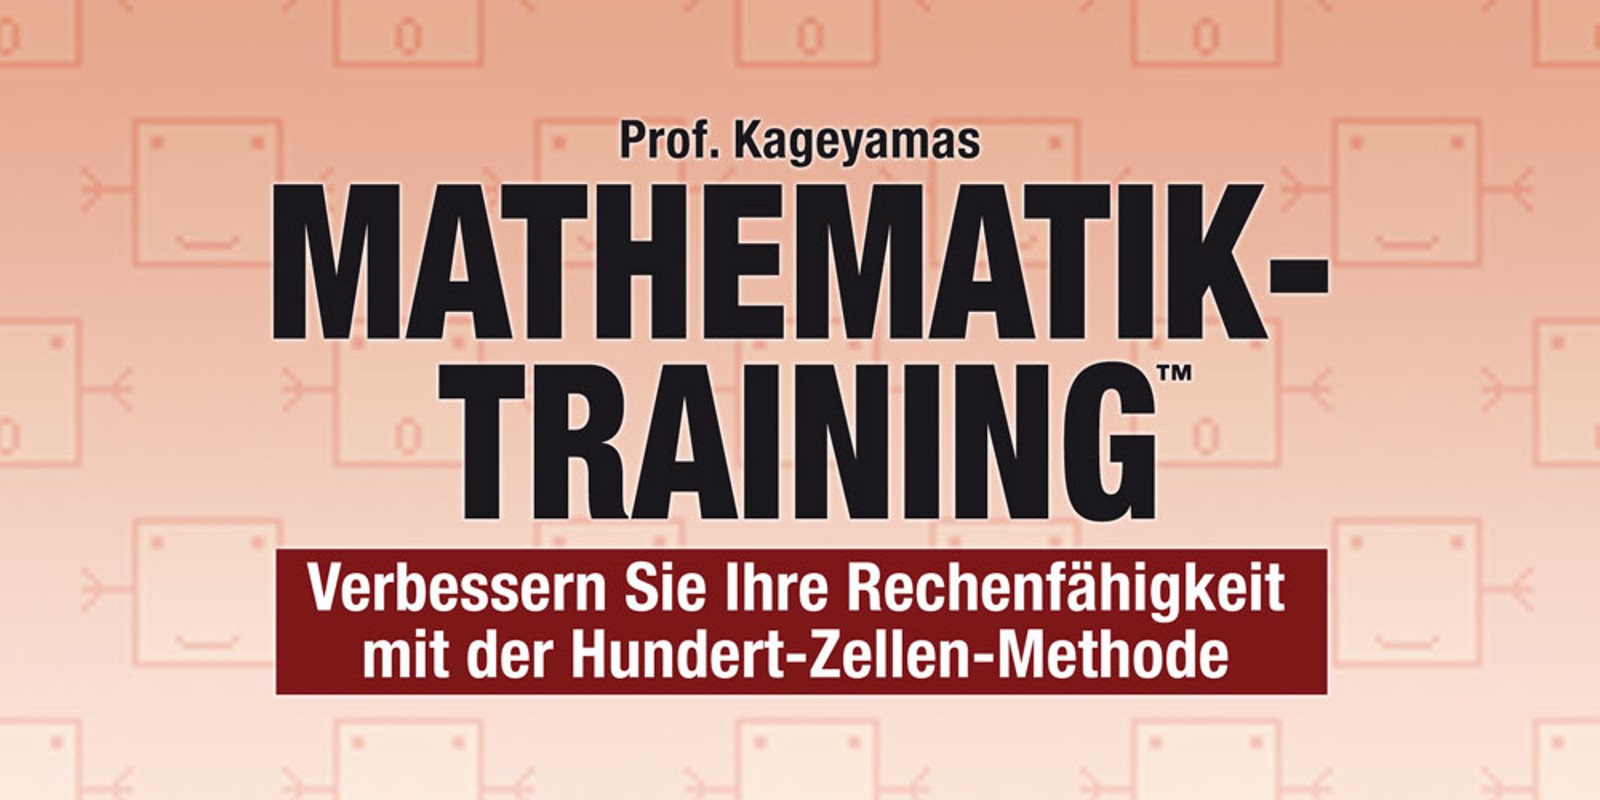 Professor Kageyamas Mathematik-Training